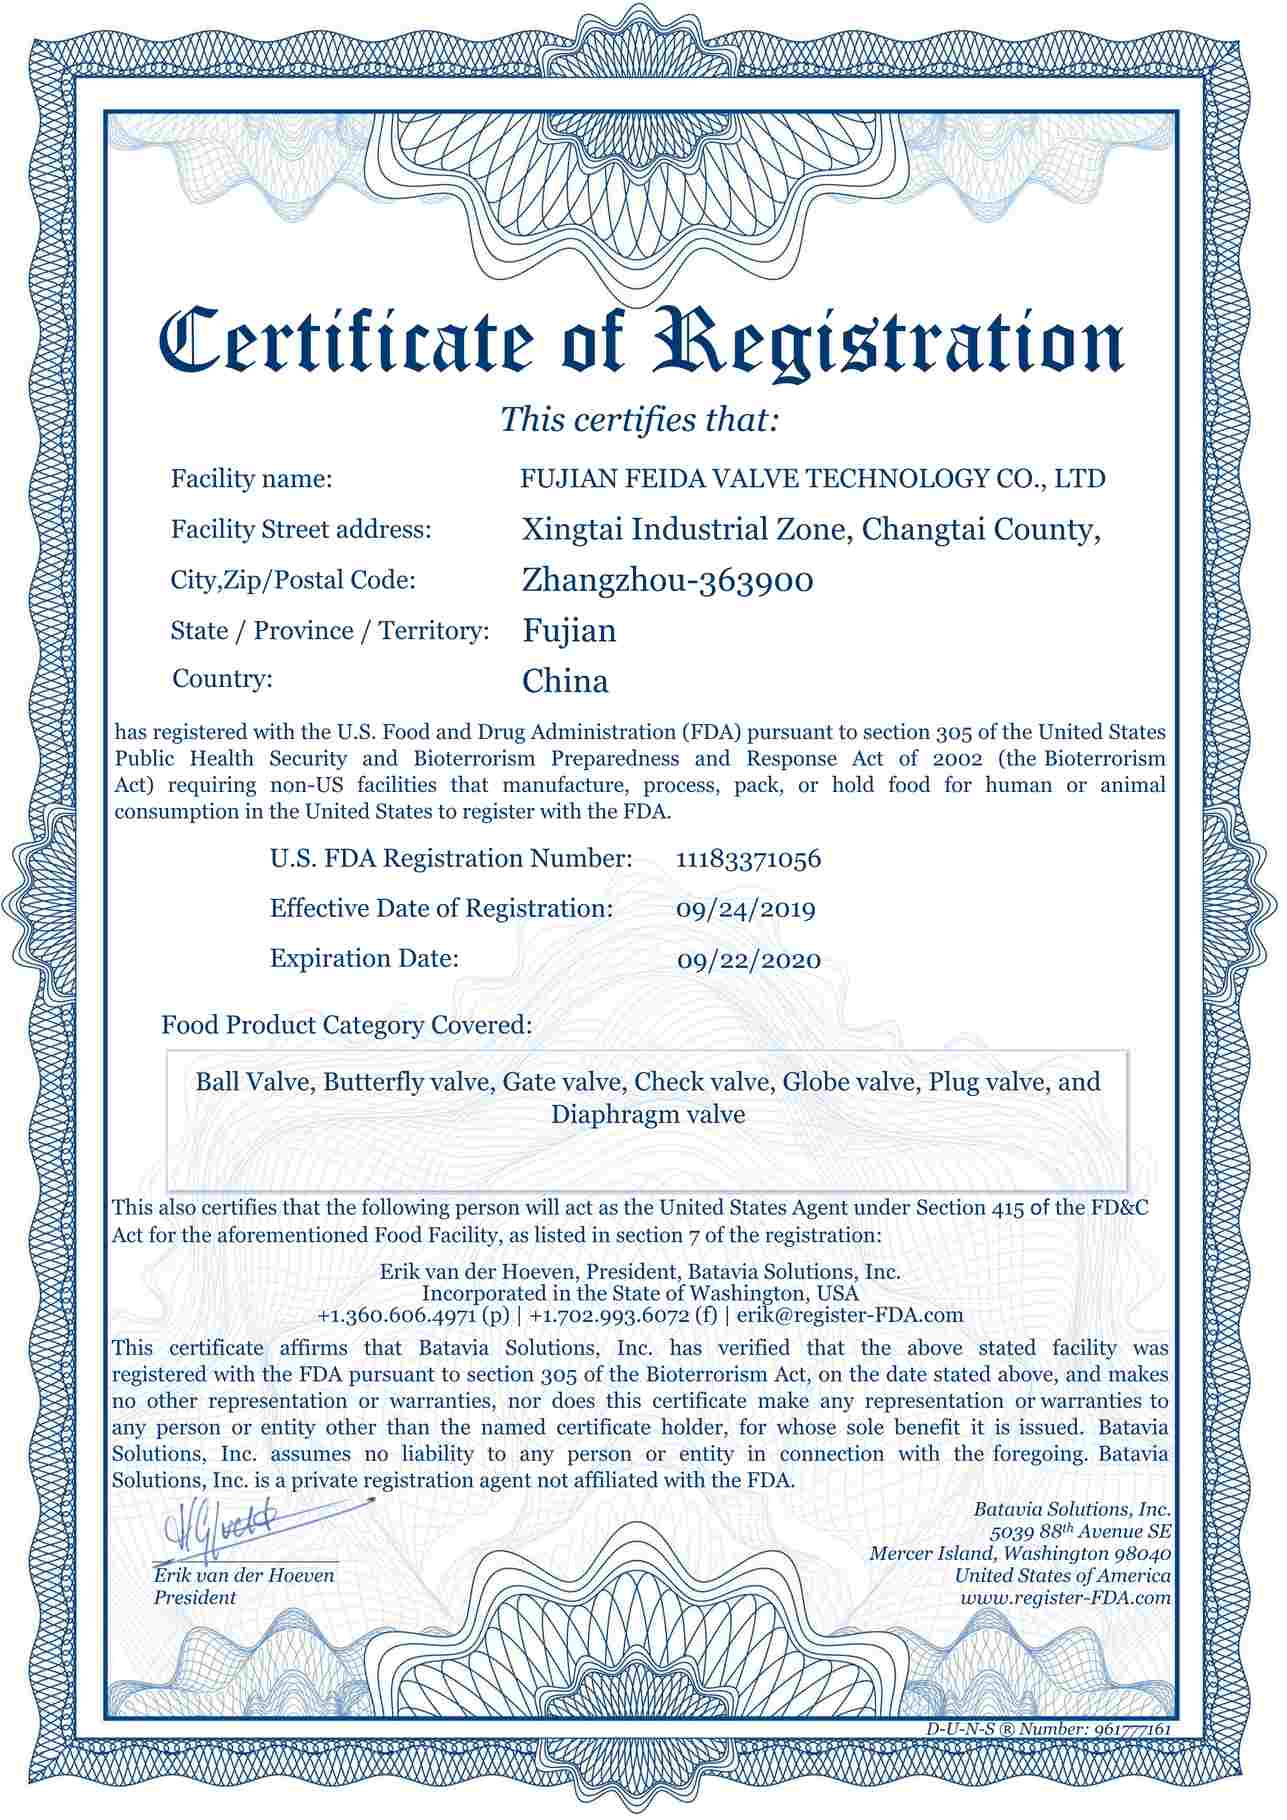 Certificat de la Food and Drug Administration des États-Unis (FDA)
        